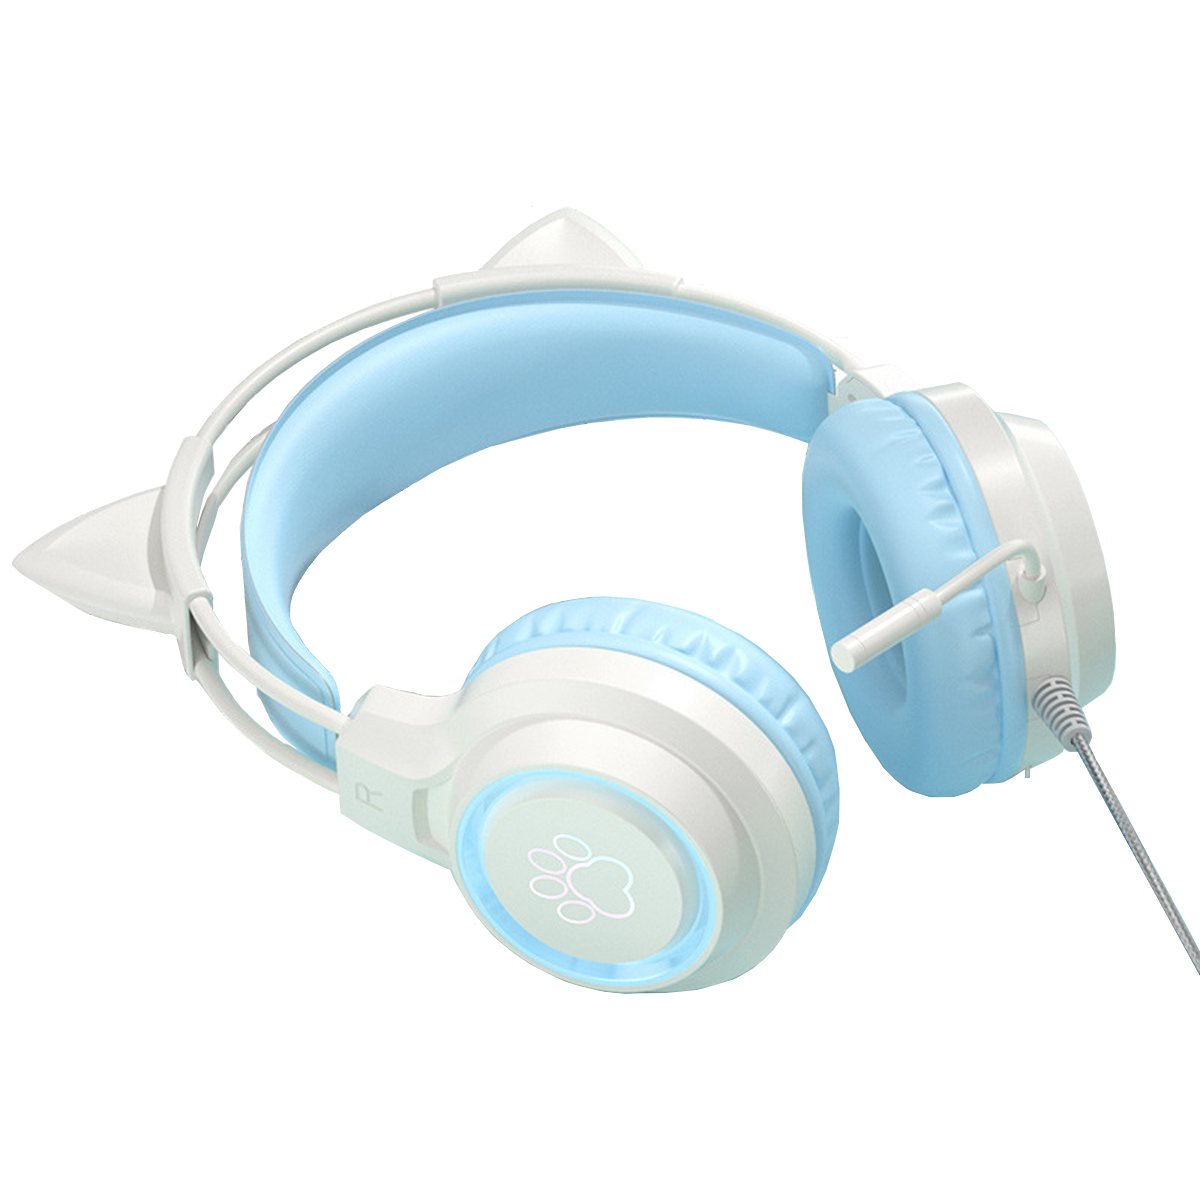 KINSI Gaming-Headset mit Katzenohren, Over-Ear-Kopfhörer, abnehmbar, Katzenohren sind blau Kopfhörer Die Over-ear